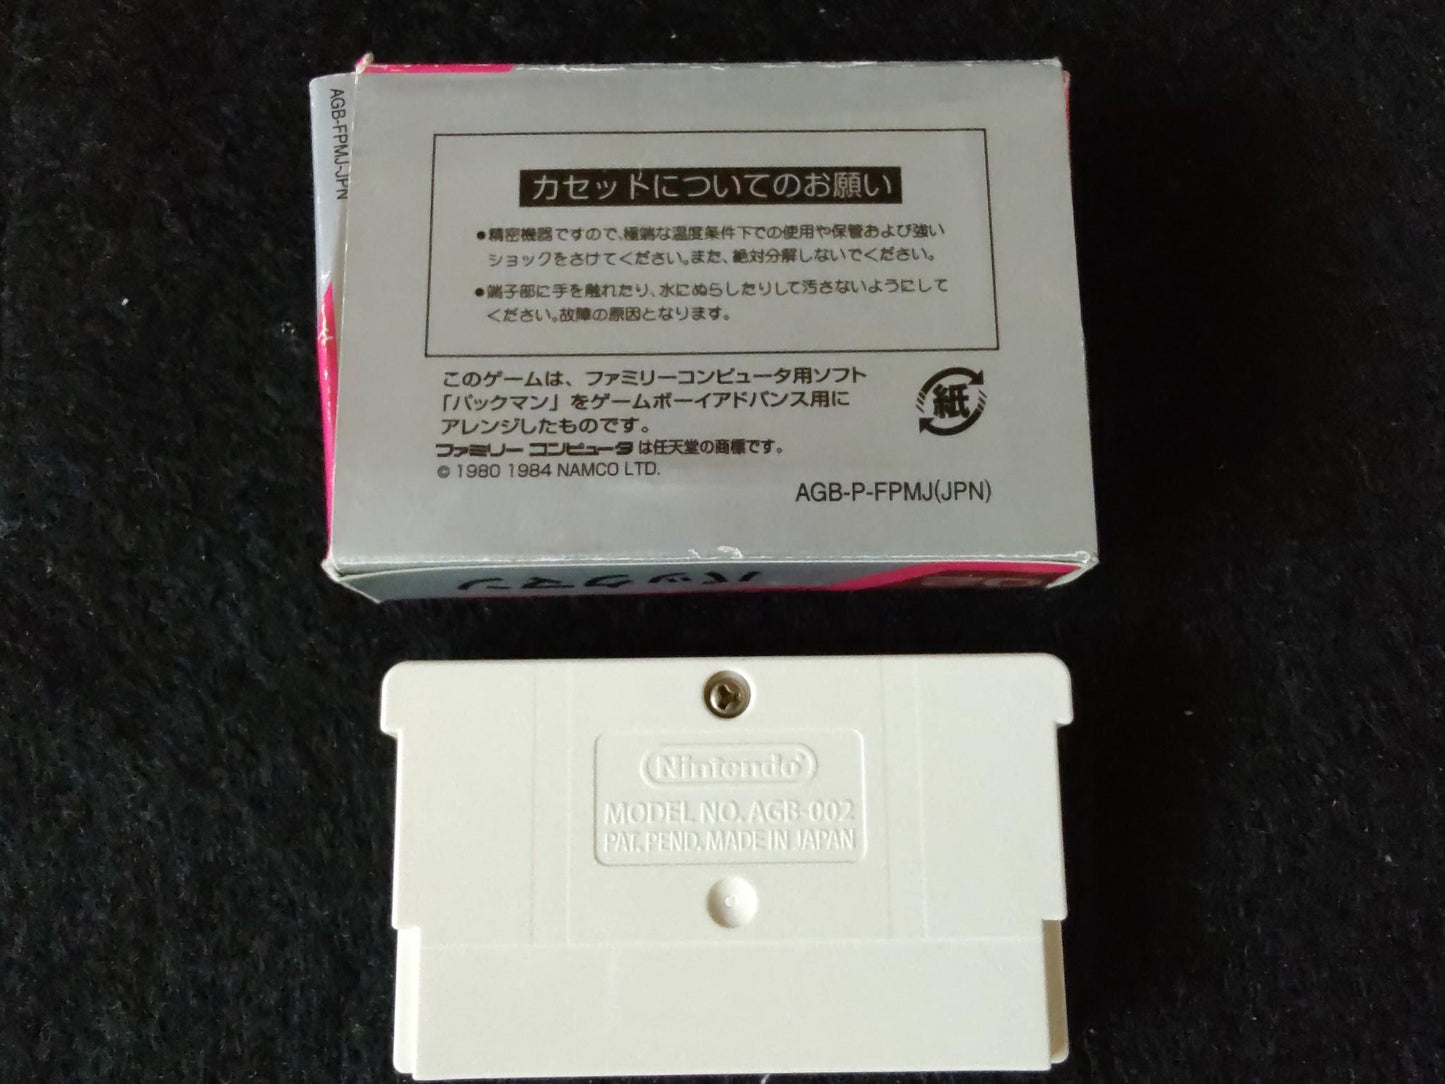 STAR SOLDIER, Donkey Kong, PAC MAN Famicom Mini Ver. Gameboy Advance GBA-f0826-